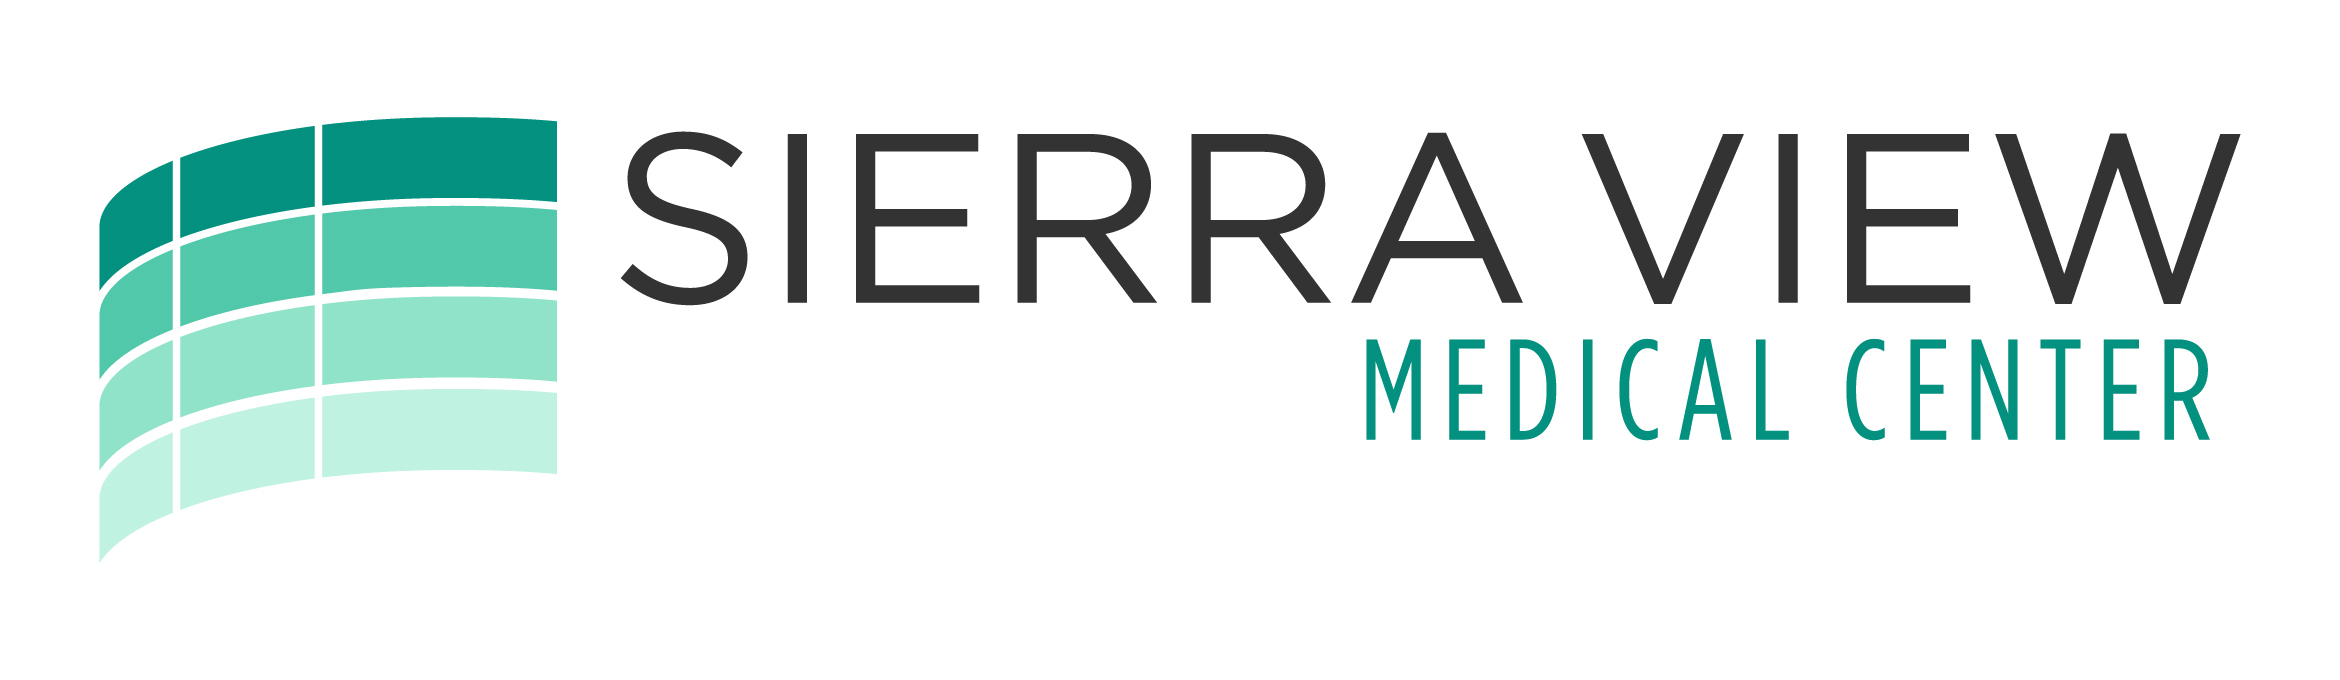 Primary logo for Sierra View Medical Center